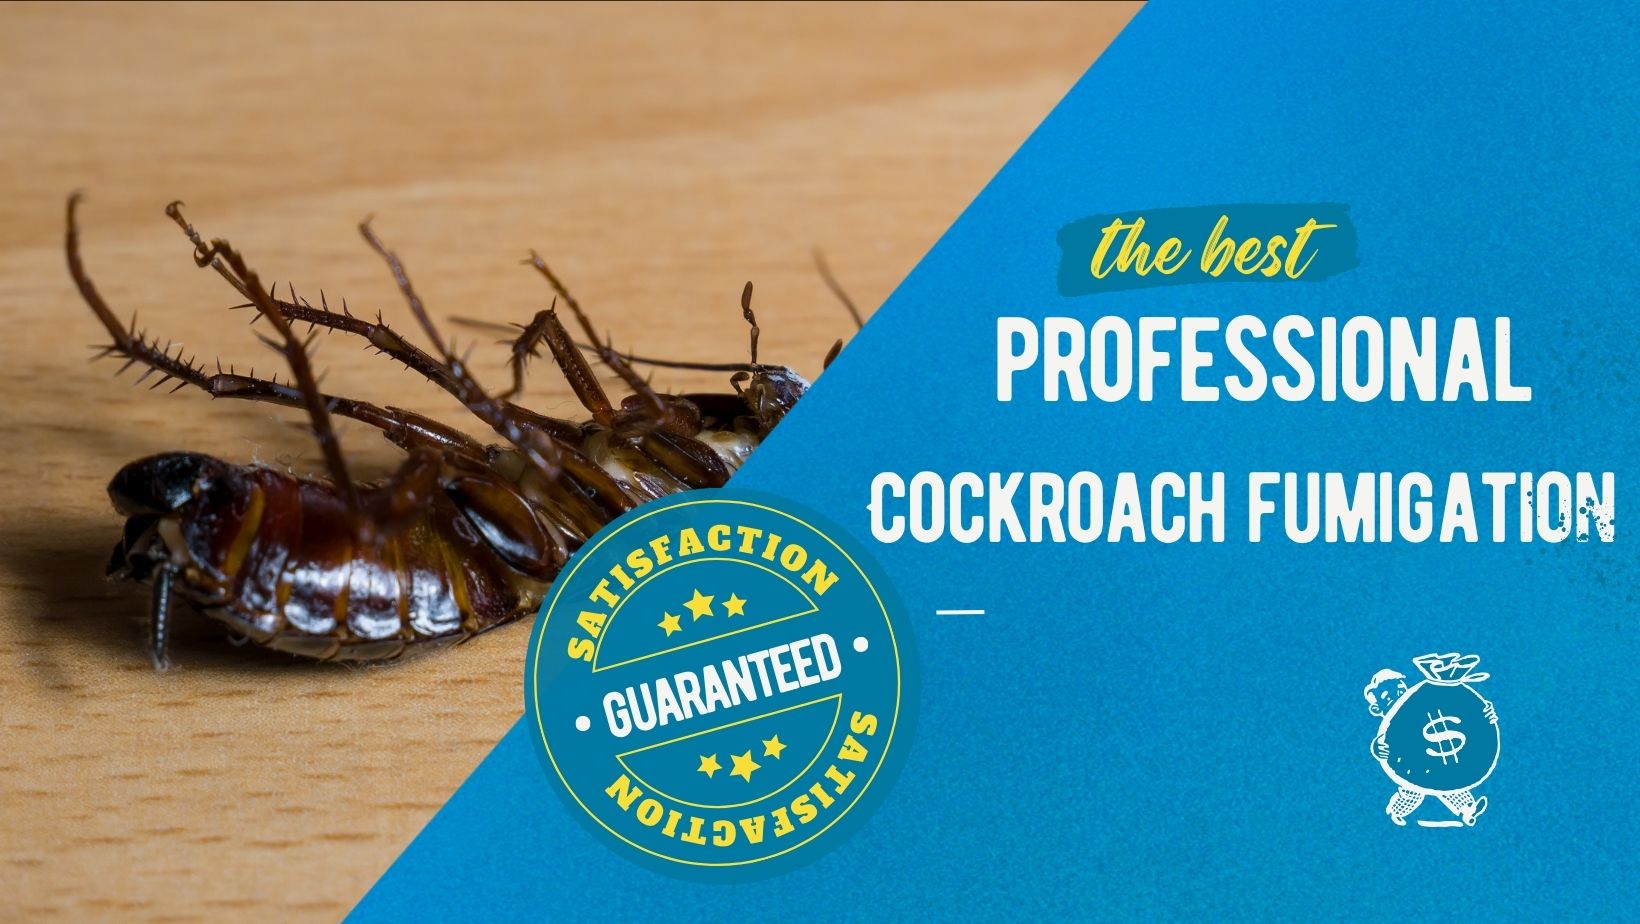 Cockroach fumigation